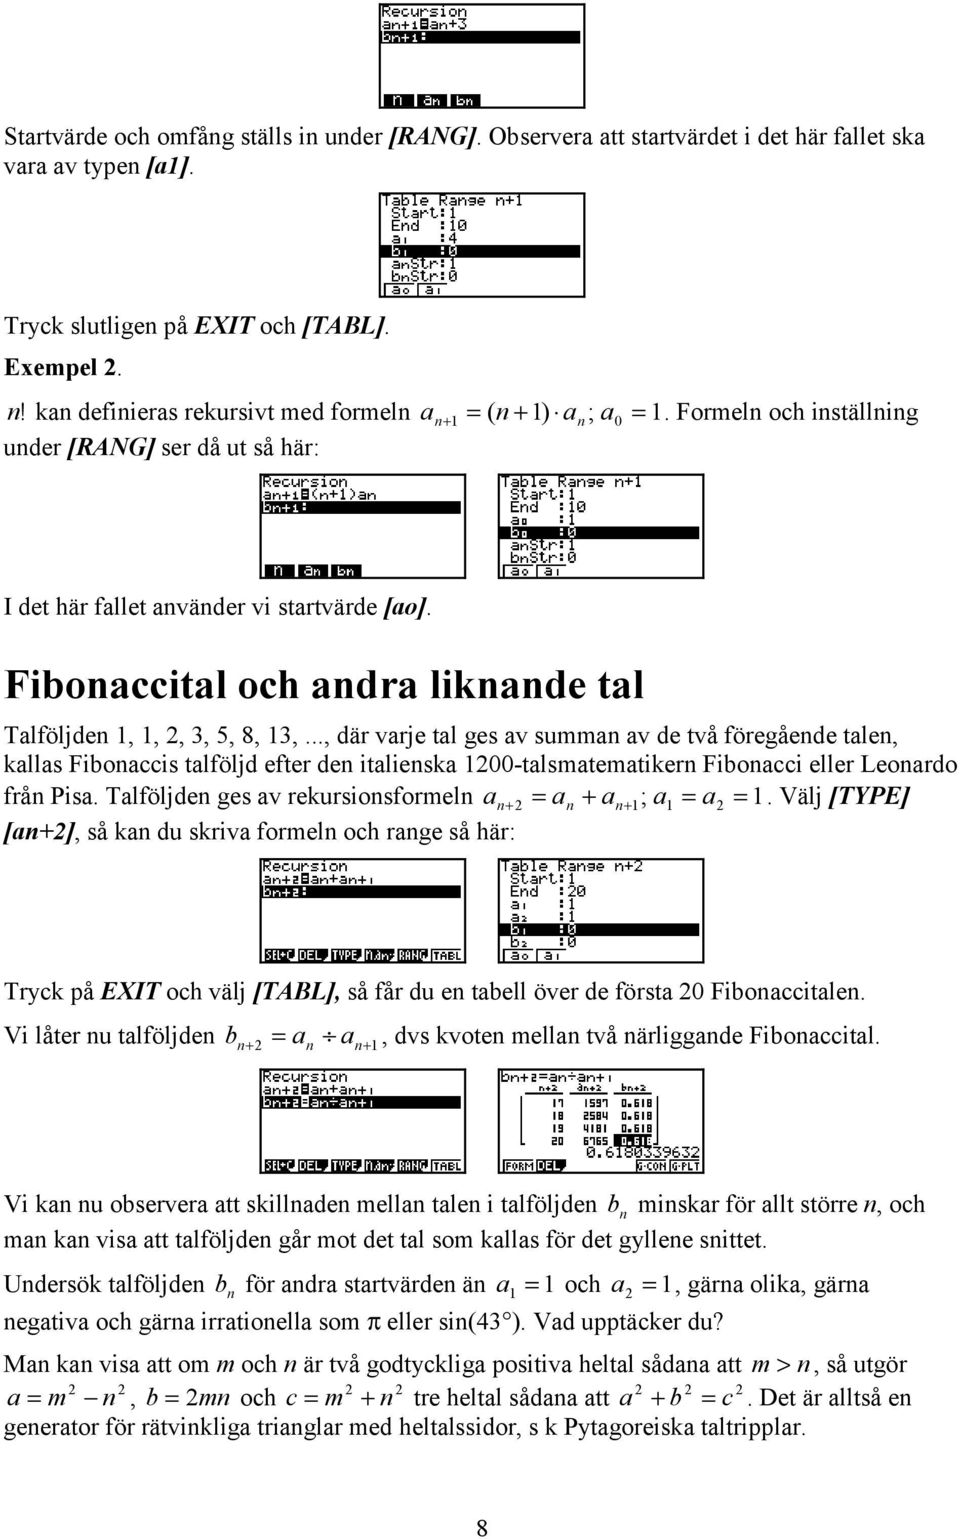 Fiboaccital och adra likade tal Talföljde 1, 1, 2, 3, 5, 8, 13,.